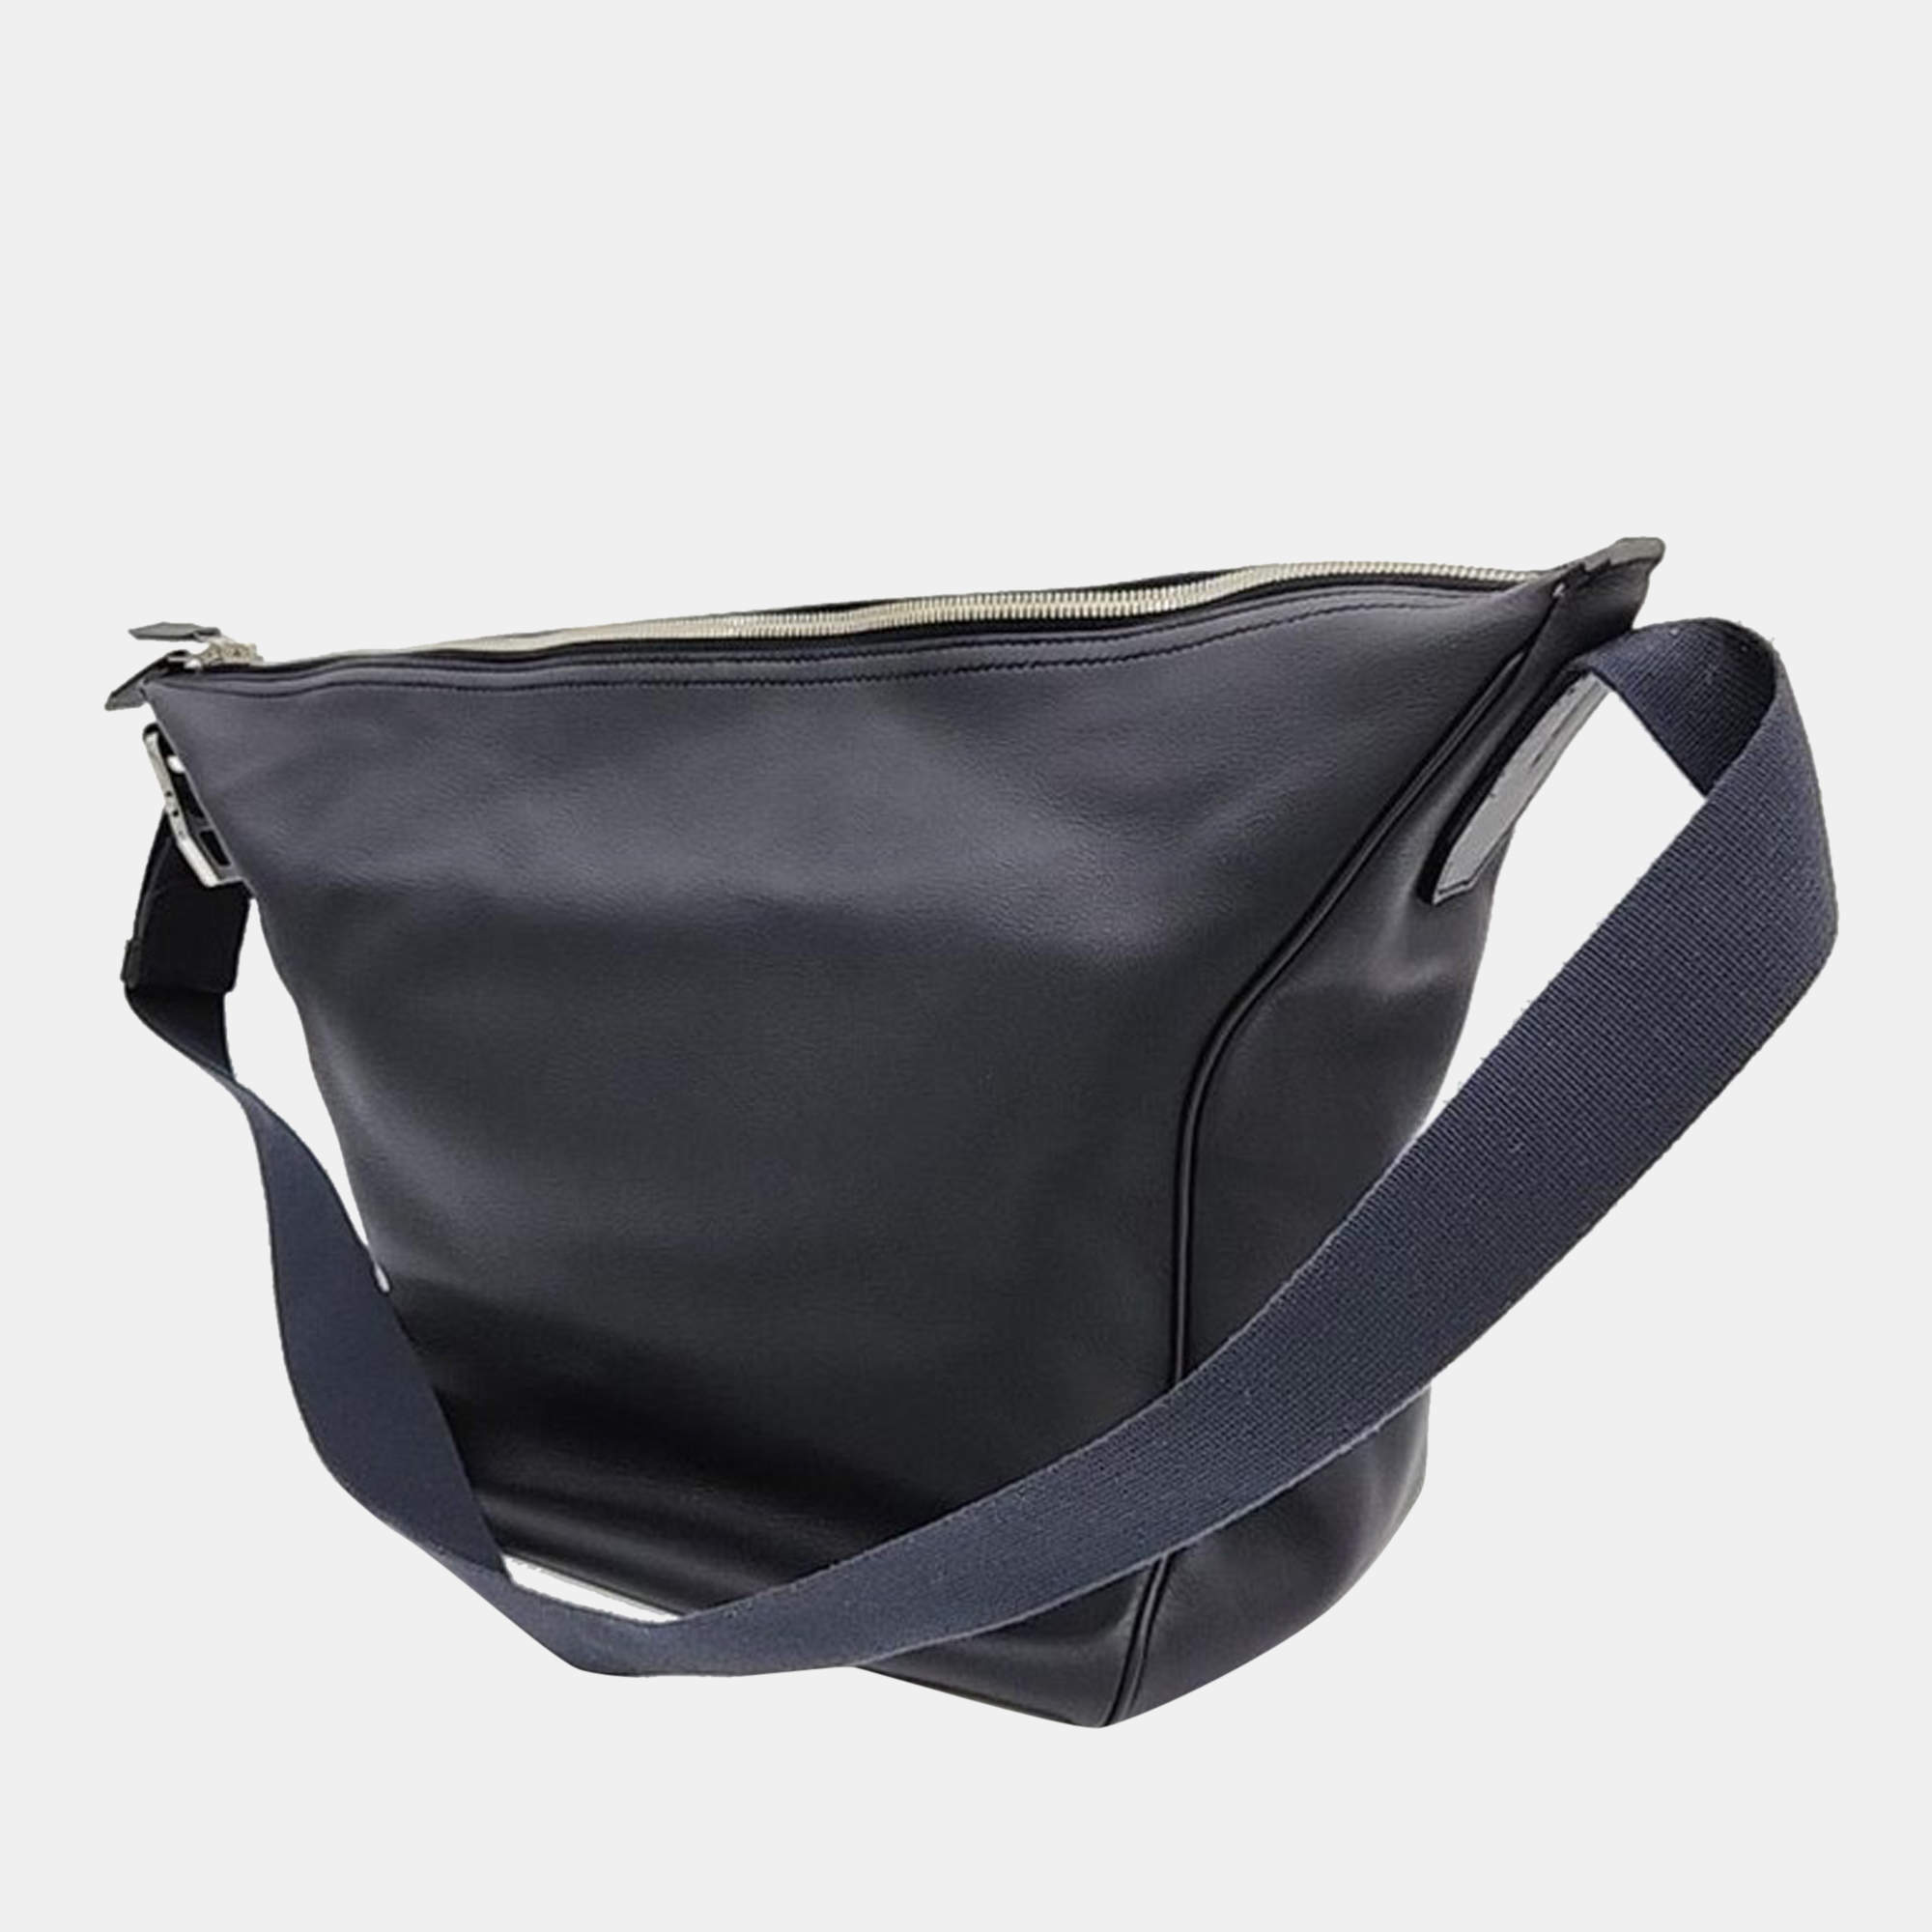 Shop HERMES Cityslide belt bag (H078614CKAA) by PlatinumFashionLtd